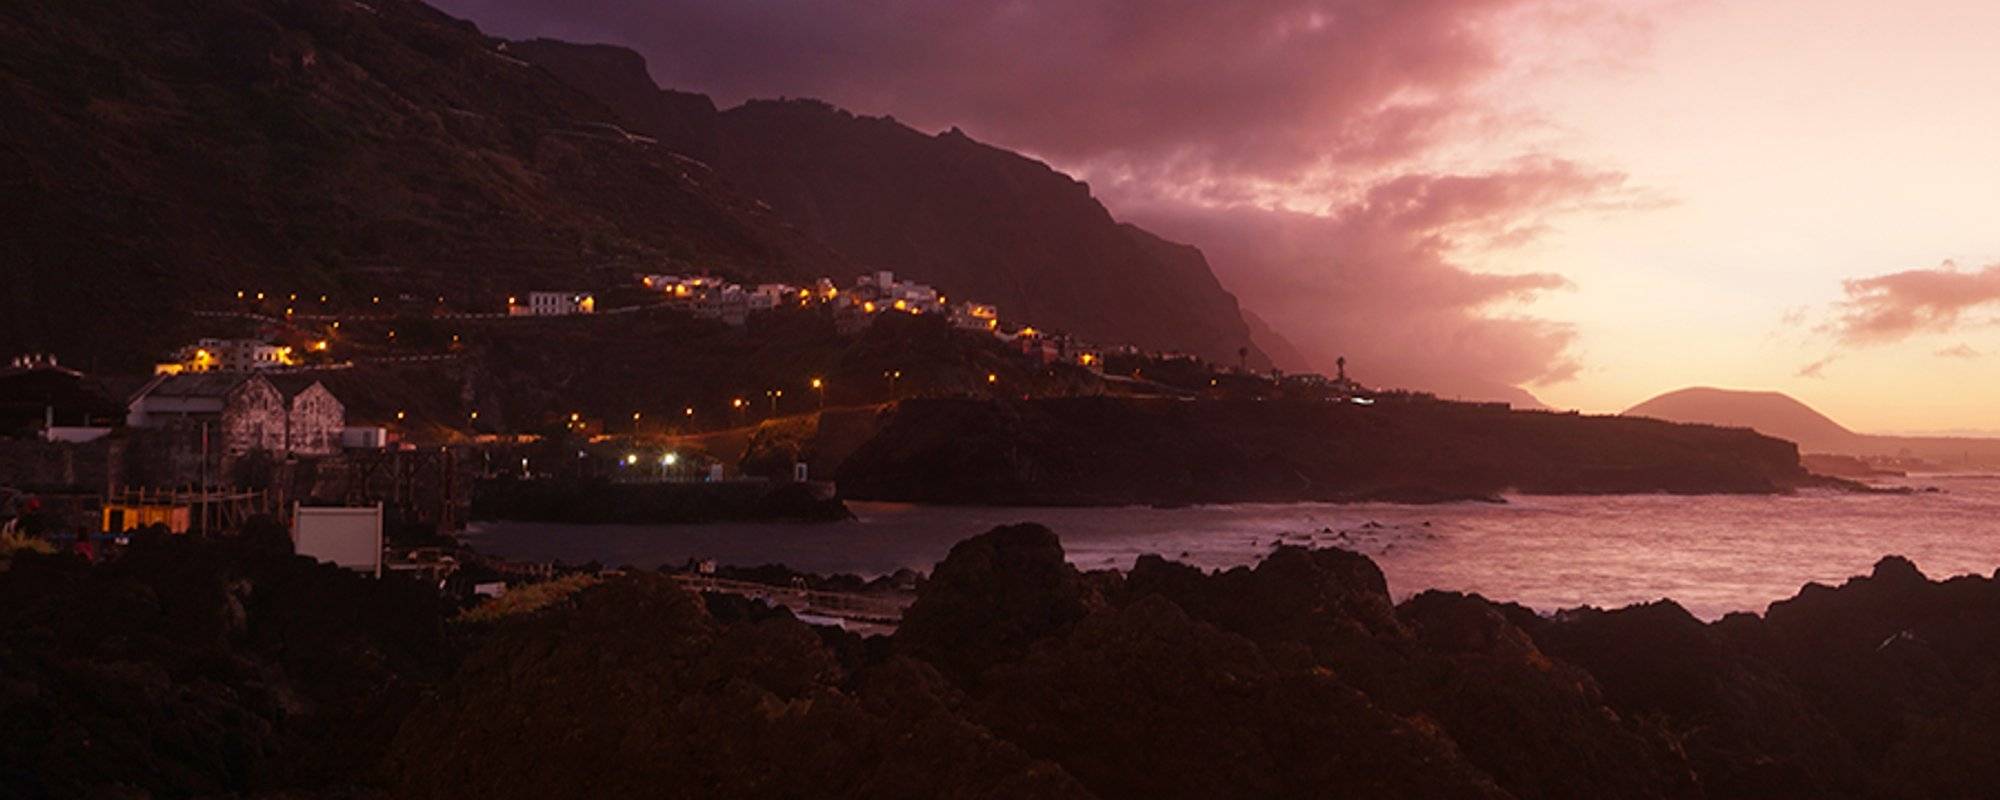 The Town of Garachico, Tenerife Islands